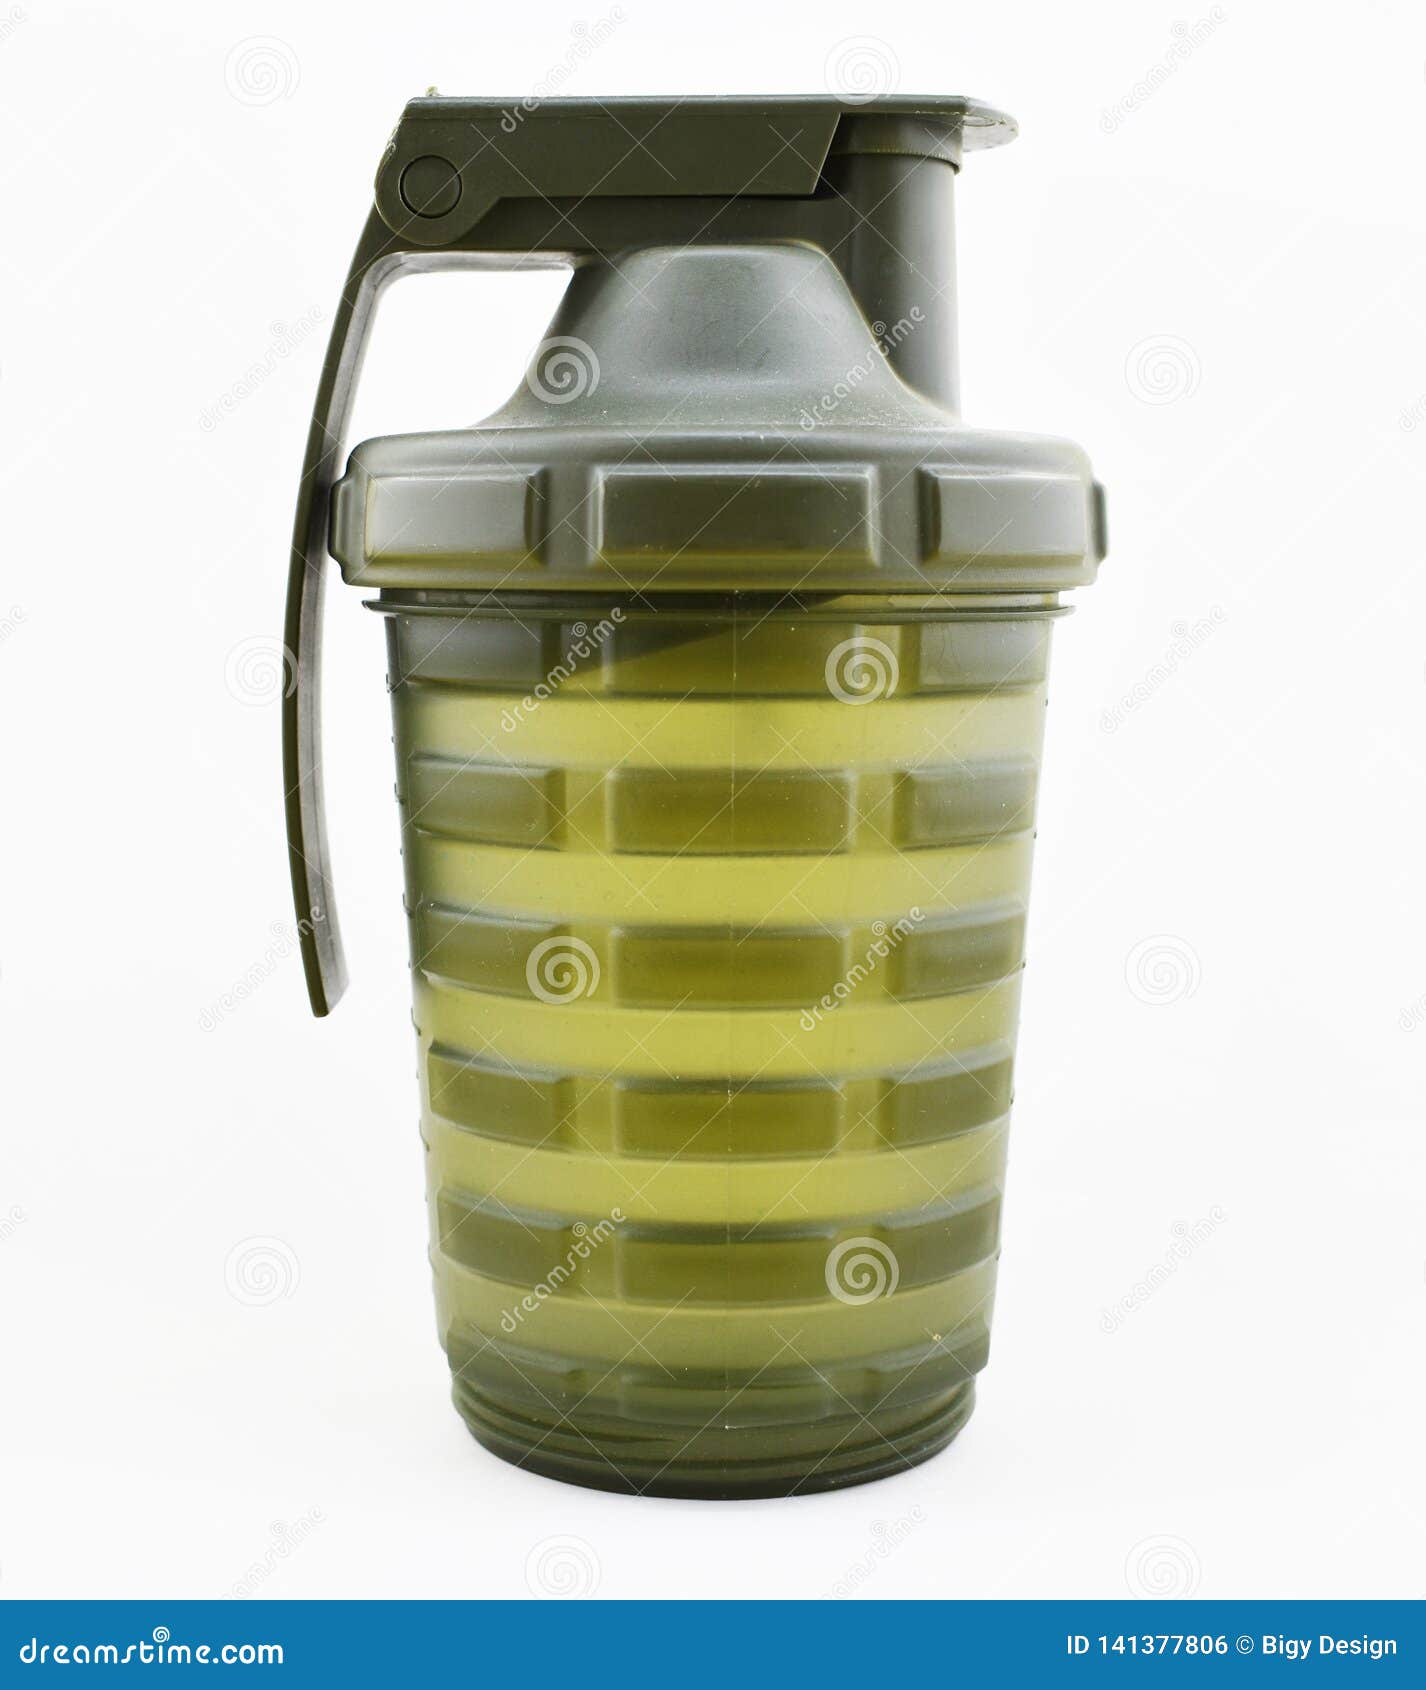 https://thumbs.dreamstime.com/z/plastic-grenade-green-color-water-bottle-plastic-grenade-green-color-water-bottle-141377806.jpg